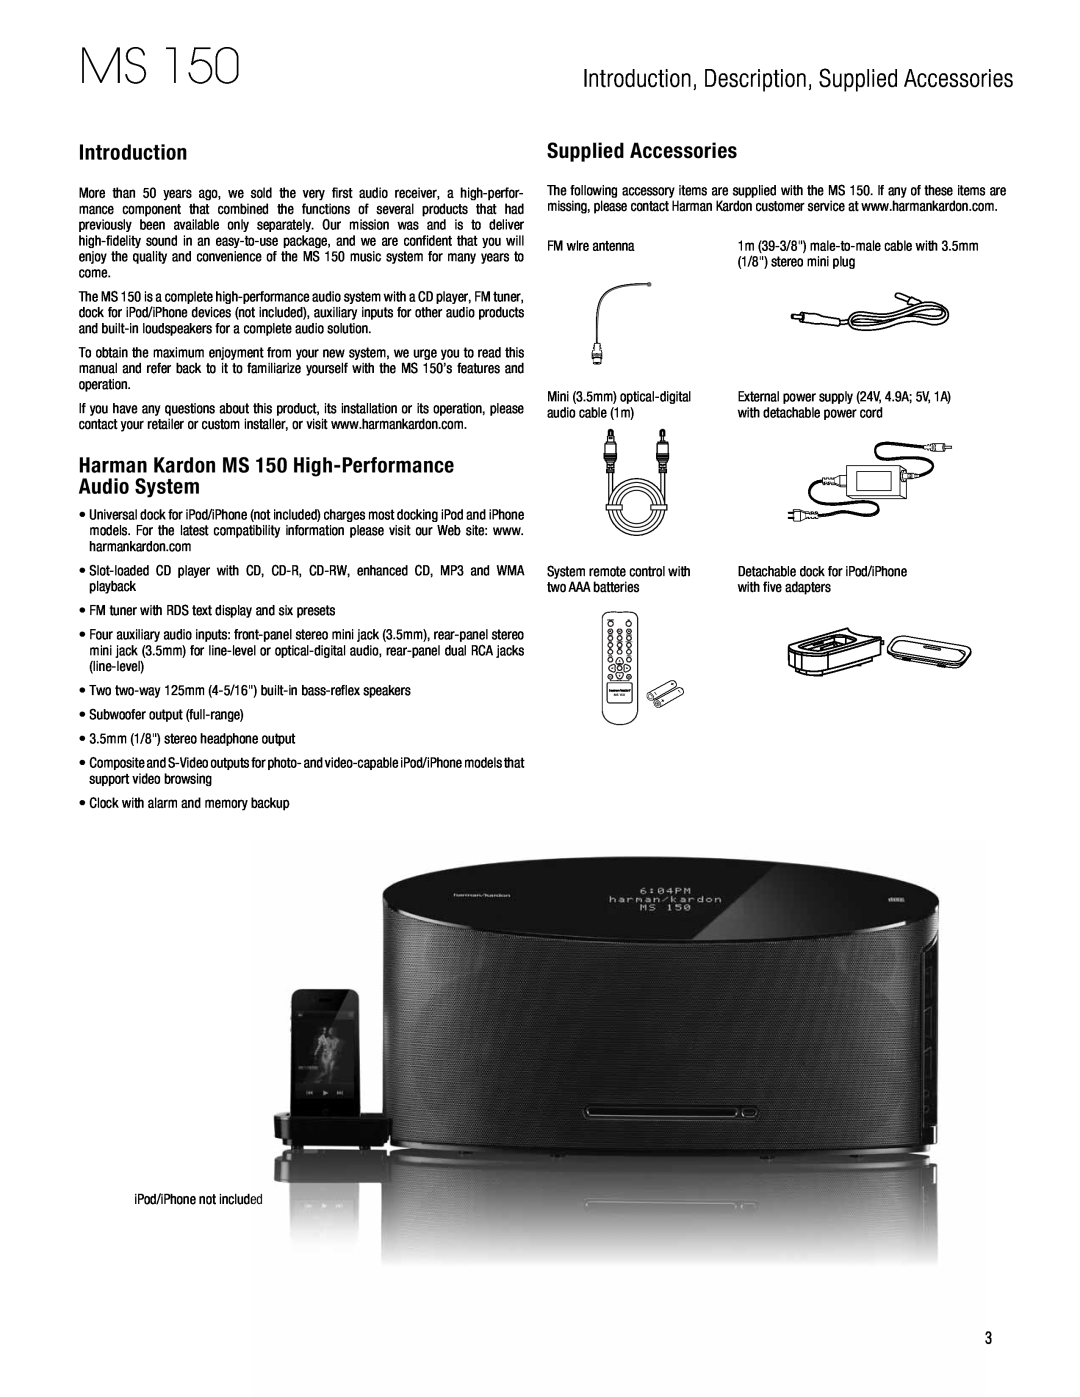 Harman-Kardon owner manual Introduction, Supplied Accessories, Harman Kardon MS 150 High-PerformanceAudio System 